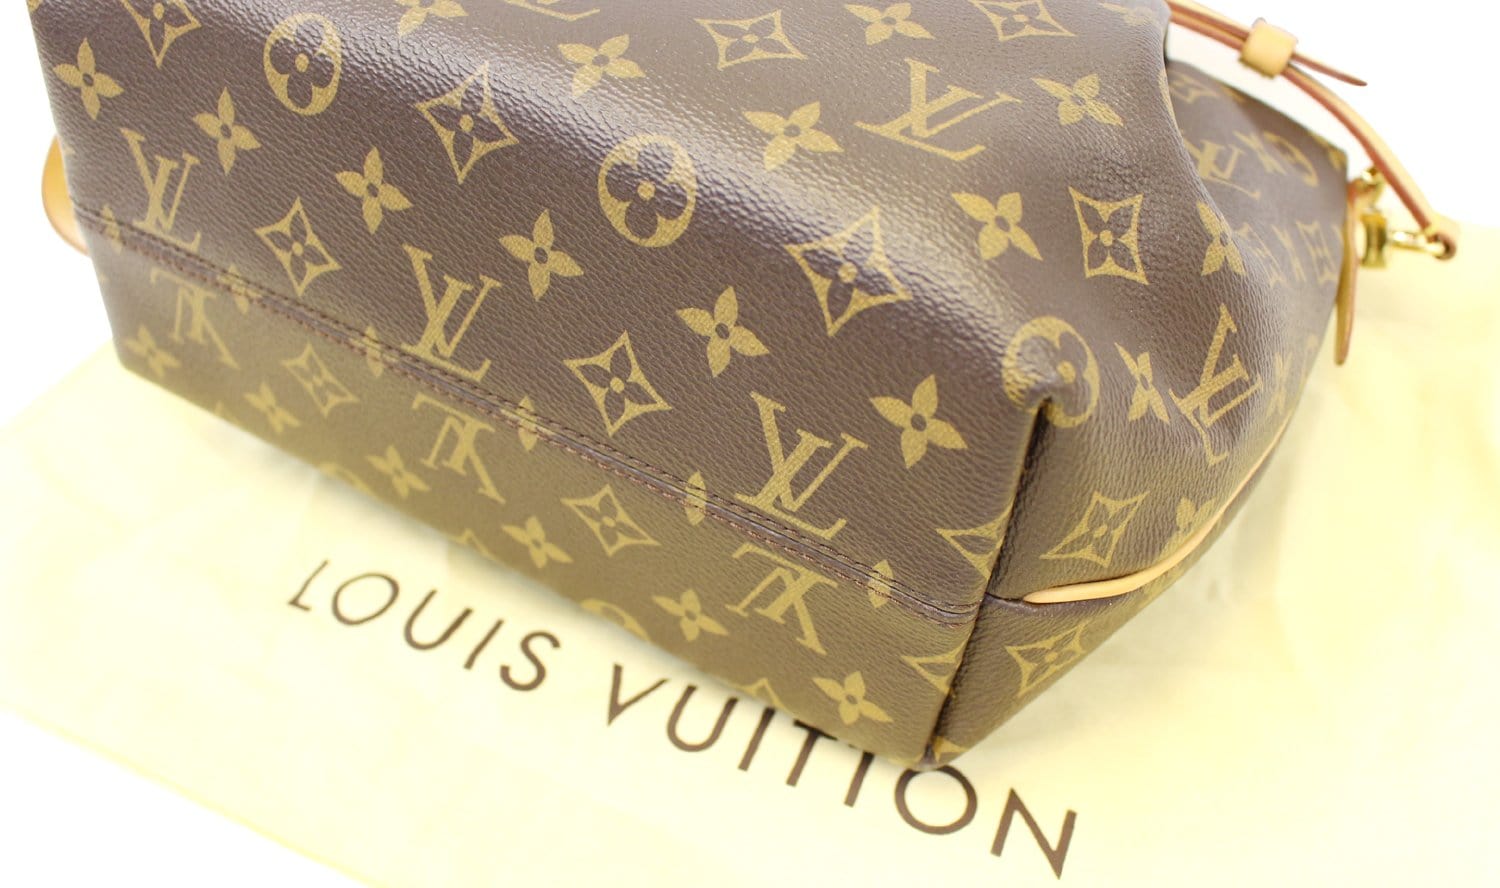 AUTHENTIC Louis Vuitton Turenne PM Monogram PREOWNED (WBA763